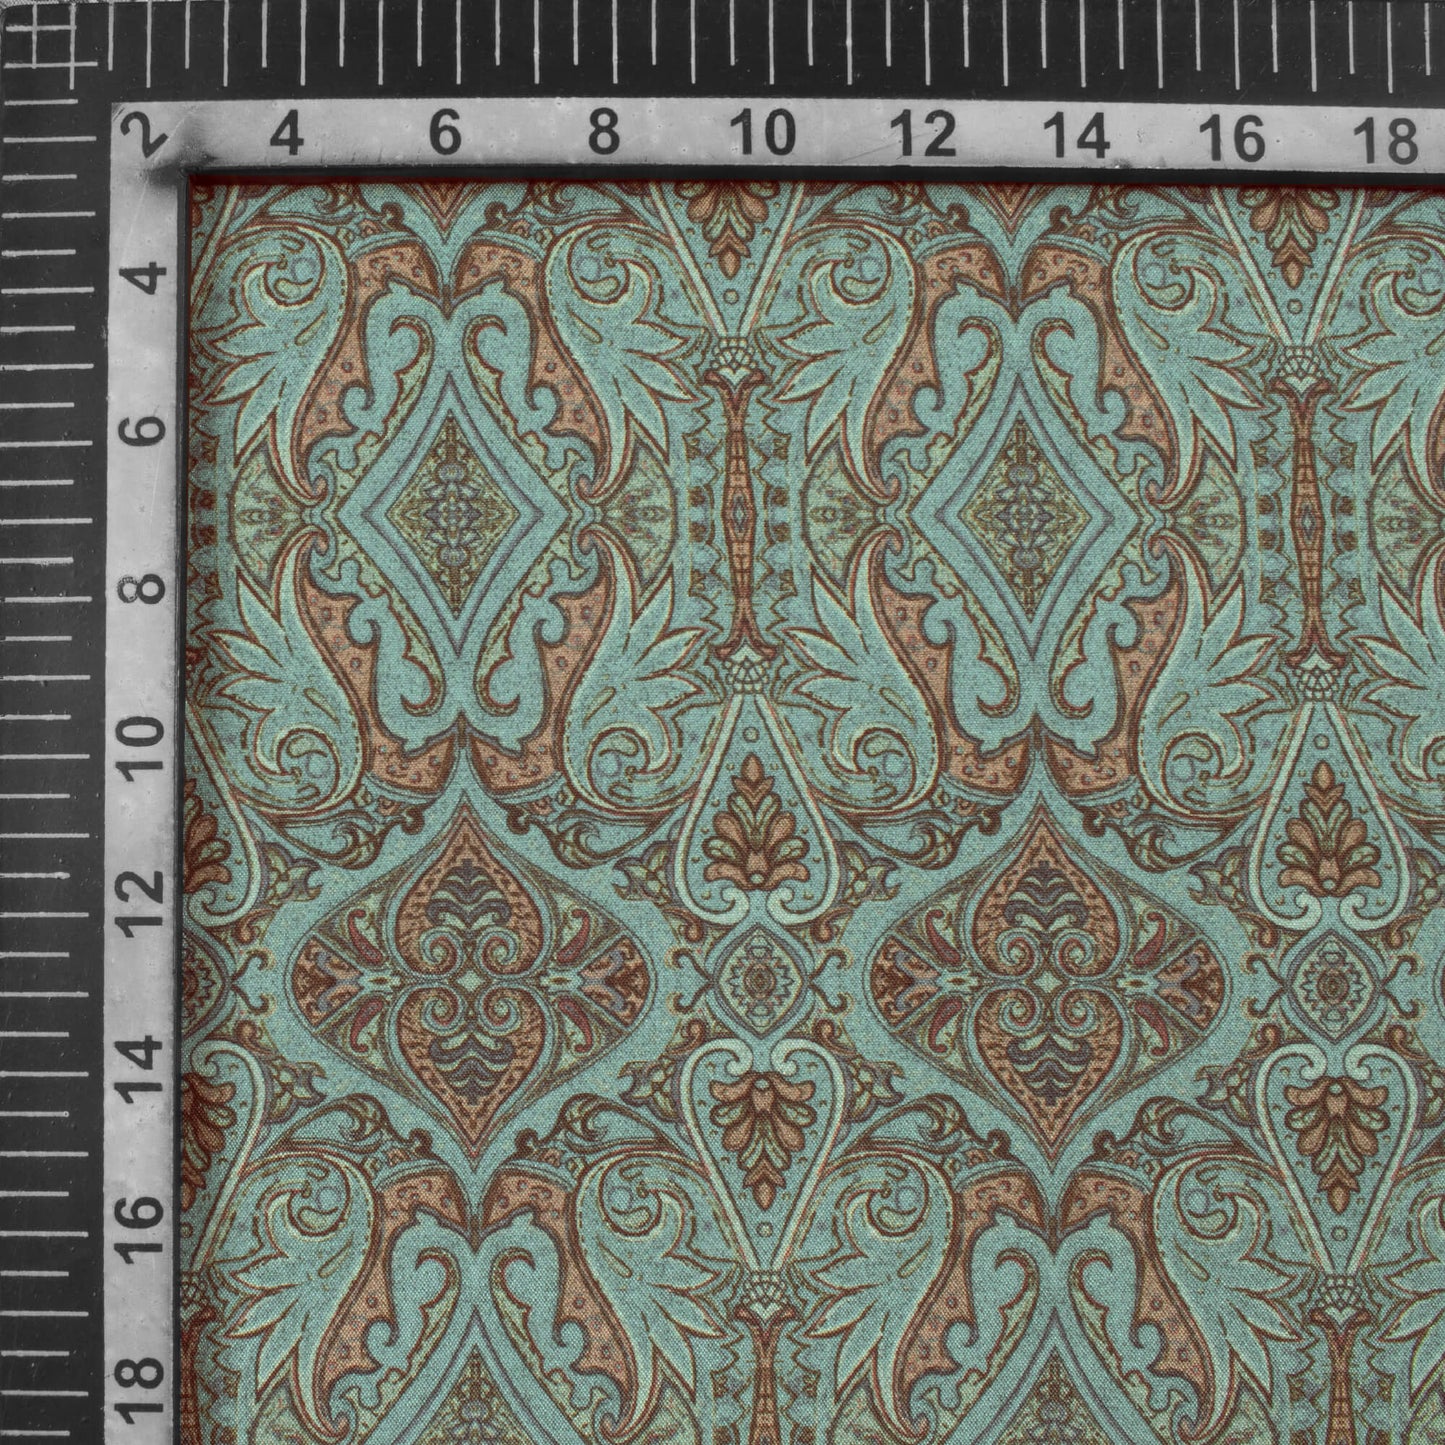 Cerulean Blue And Thulian Pink Ethnic Pattern Digital Print Crepe Silk Fabric